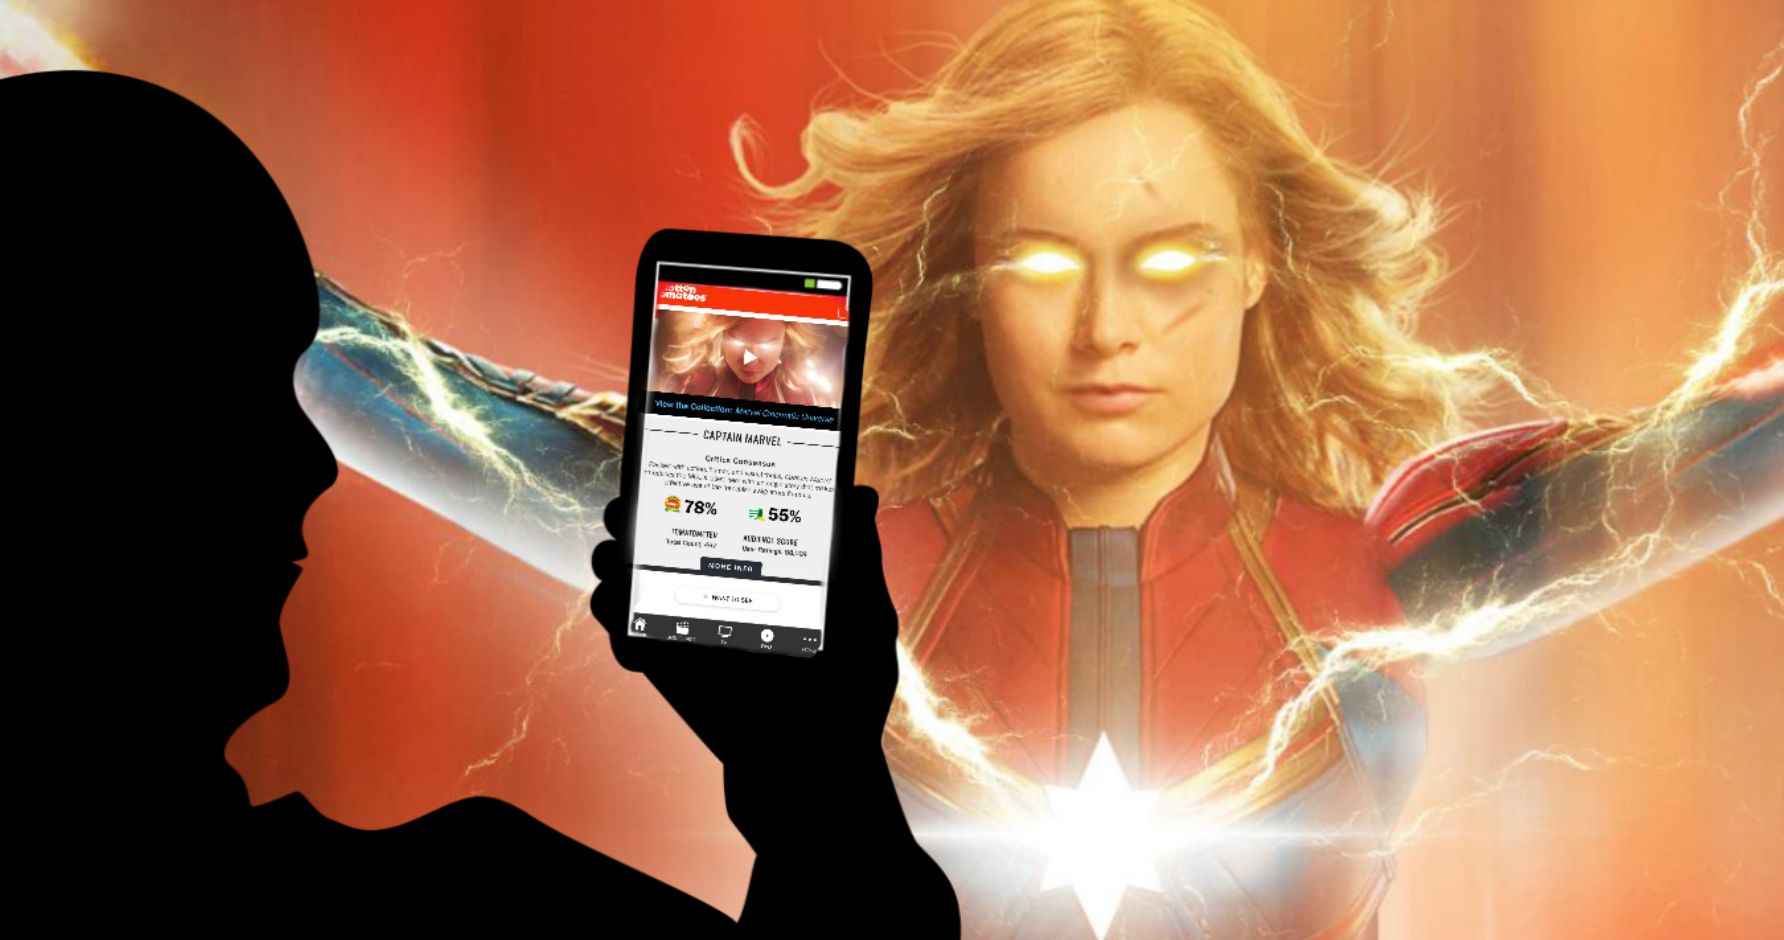 Captain Marvel Trolls Failed to Affect Box Office Claims Producer